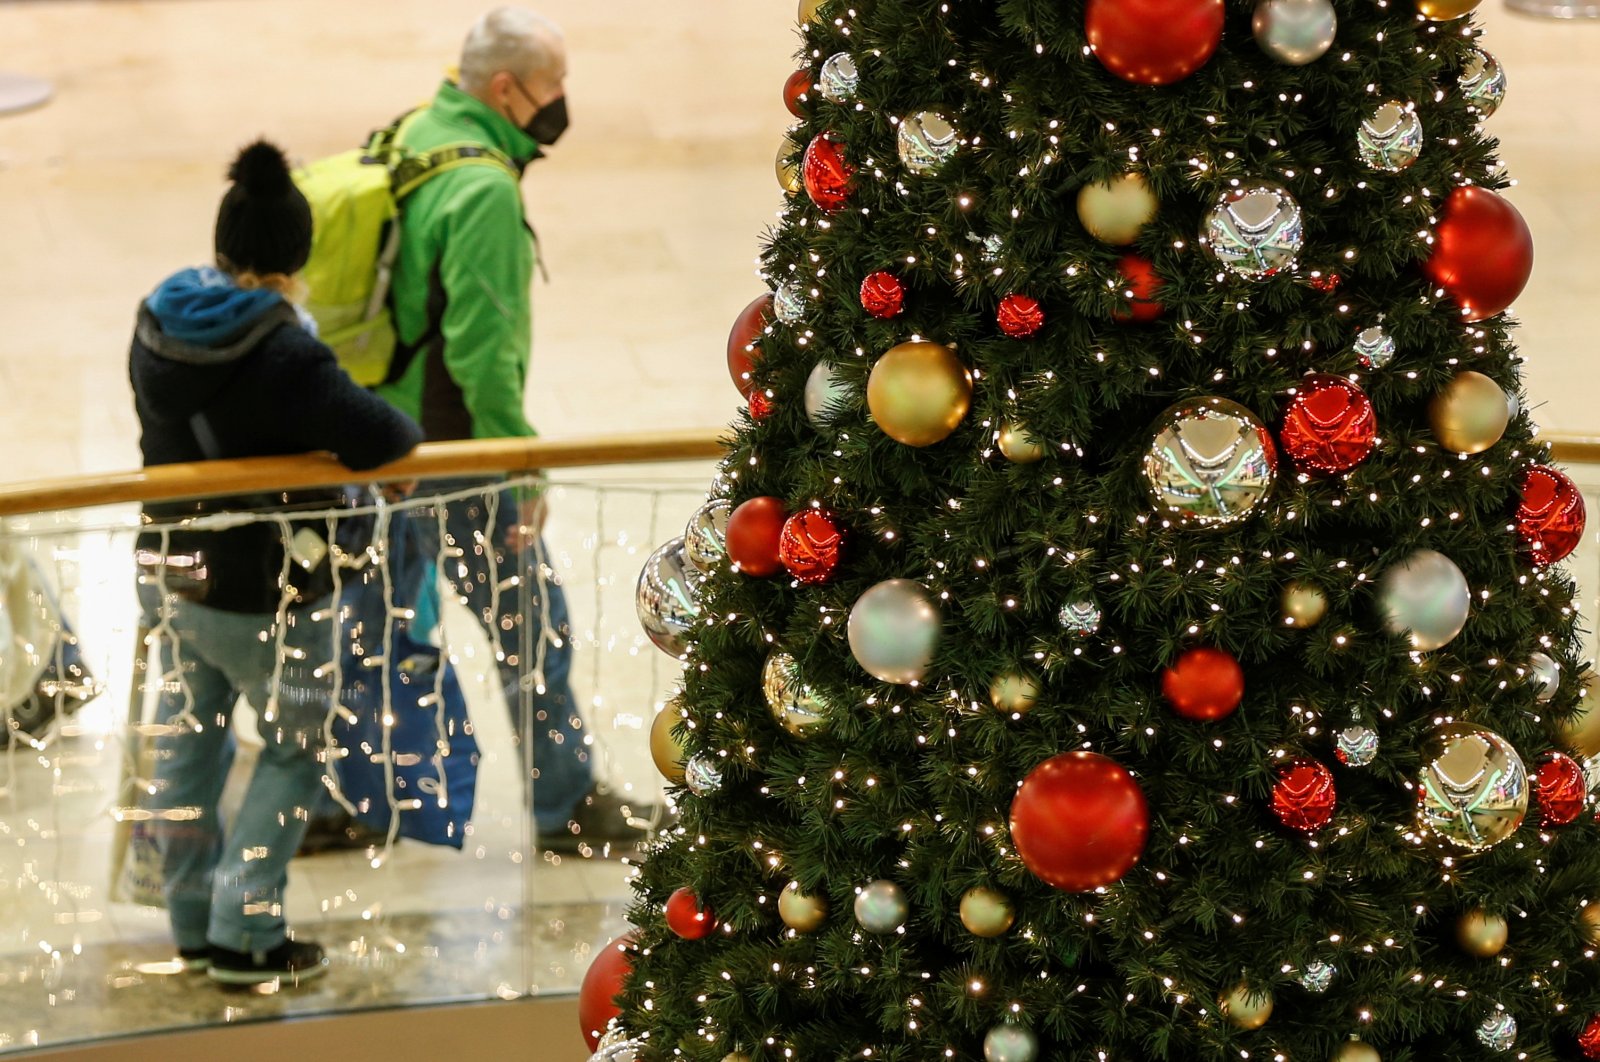 Ritel Jerman melihat musim Natal yang lambat dimulai di tengah lonjakan virus